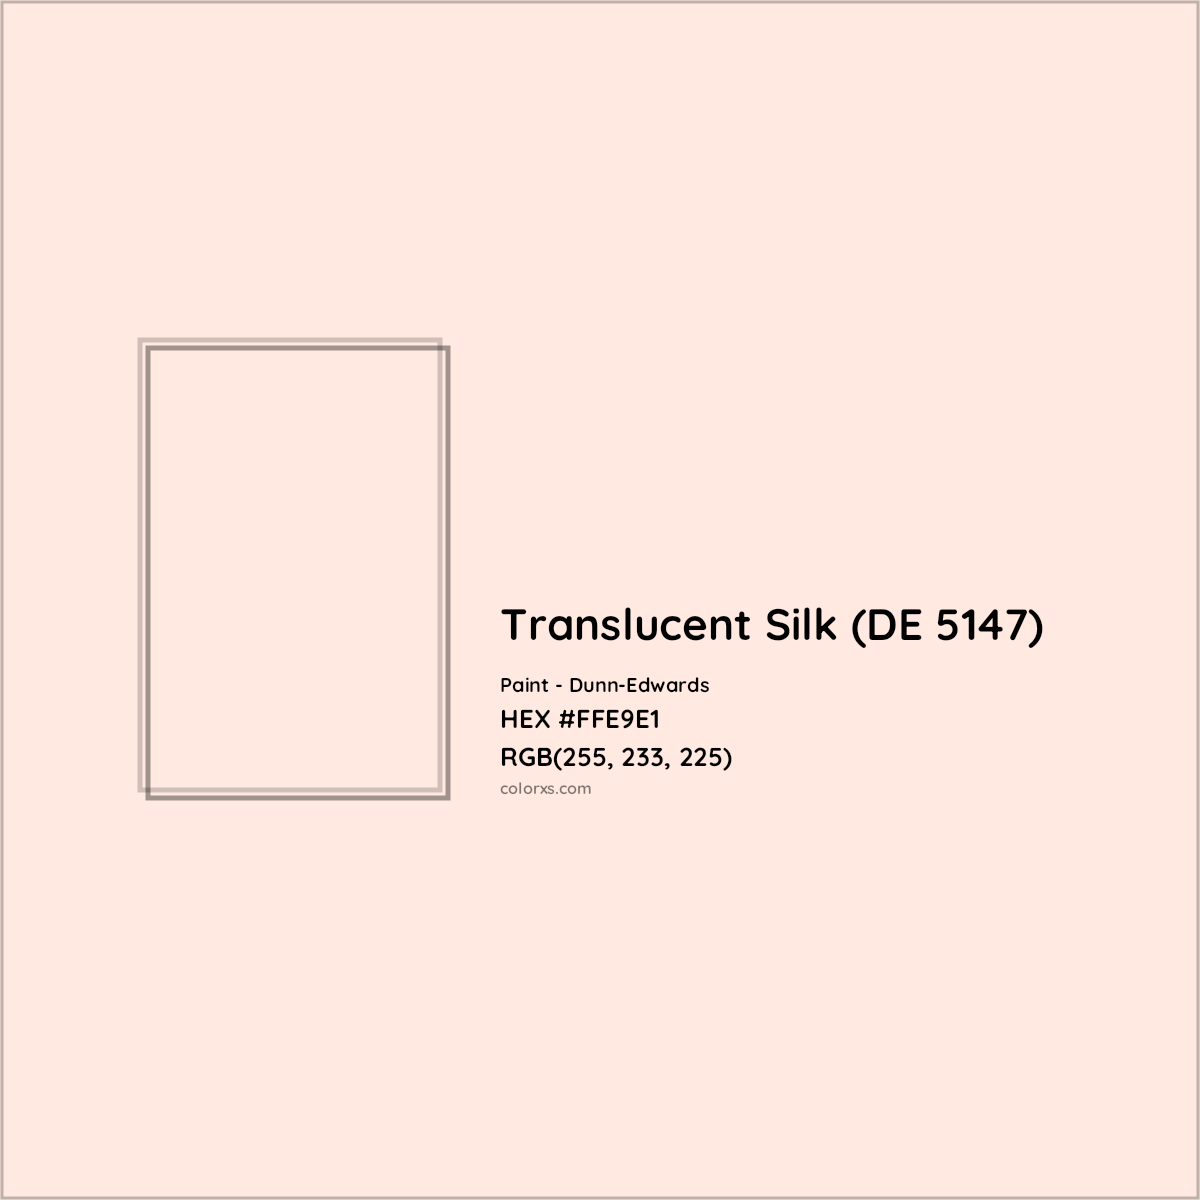 HEX #FFE9E1 Translucent Silk (DE 5147) Paint Dunn-Edwards - Color Code